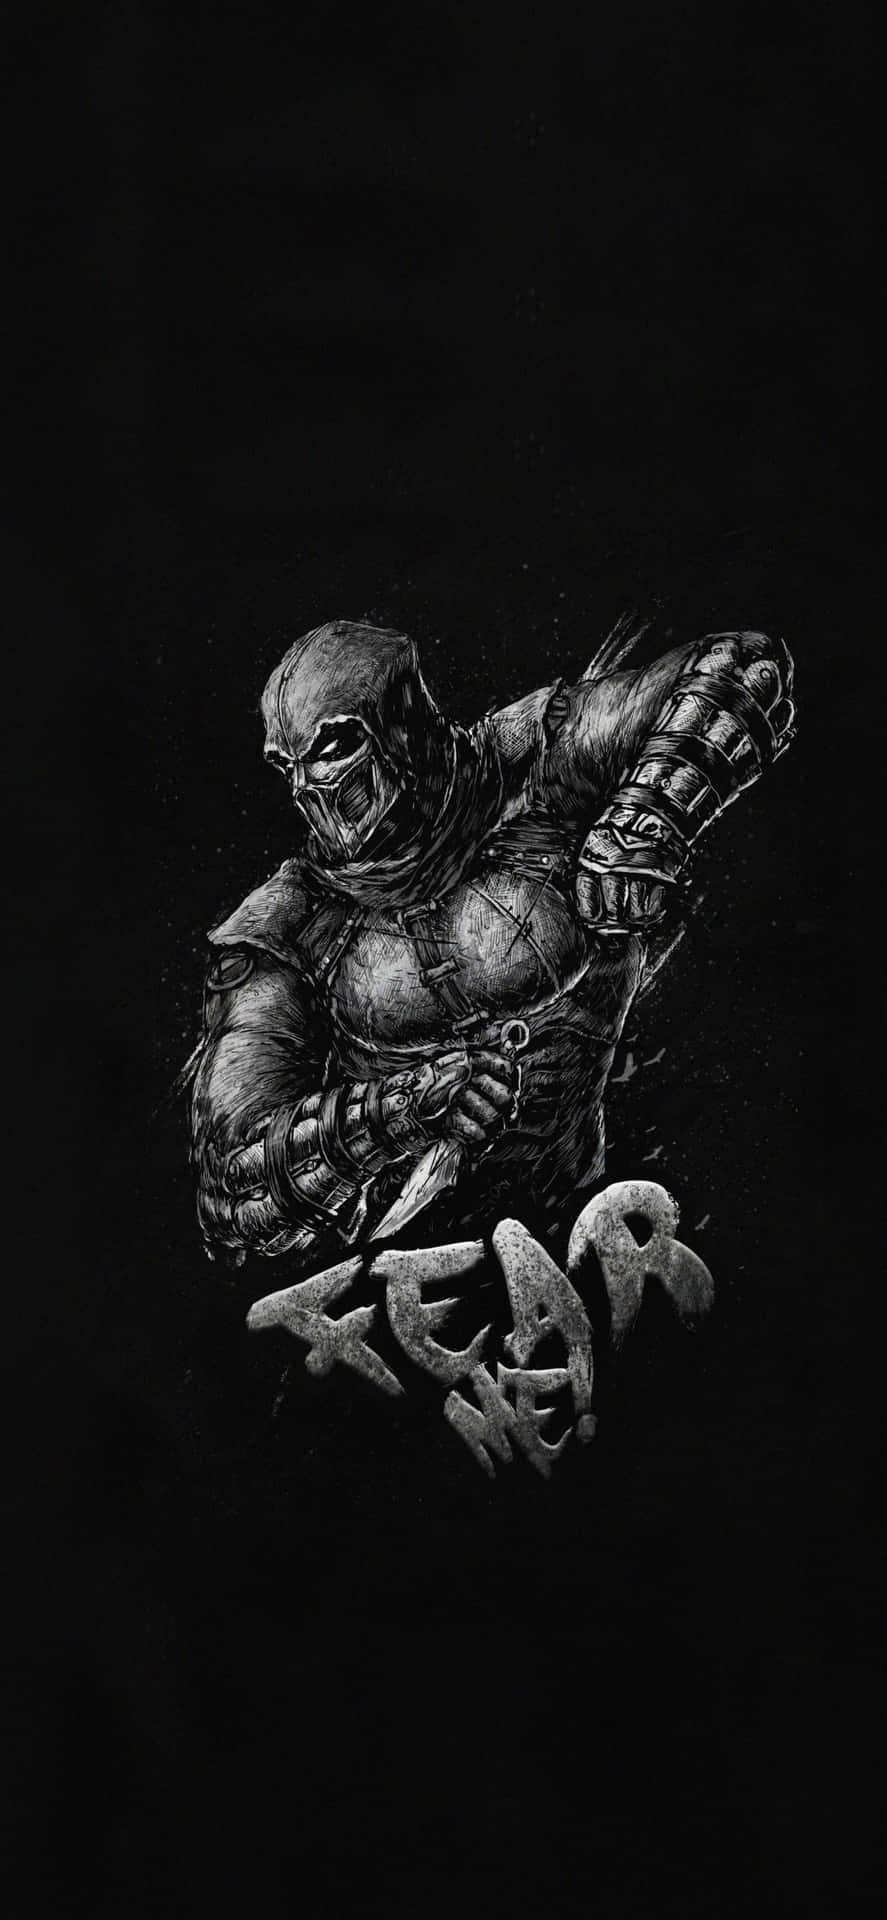 The Mortal Kombat Character Noob Saibot Wallpaper